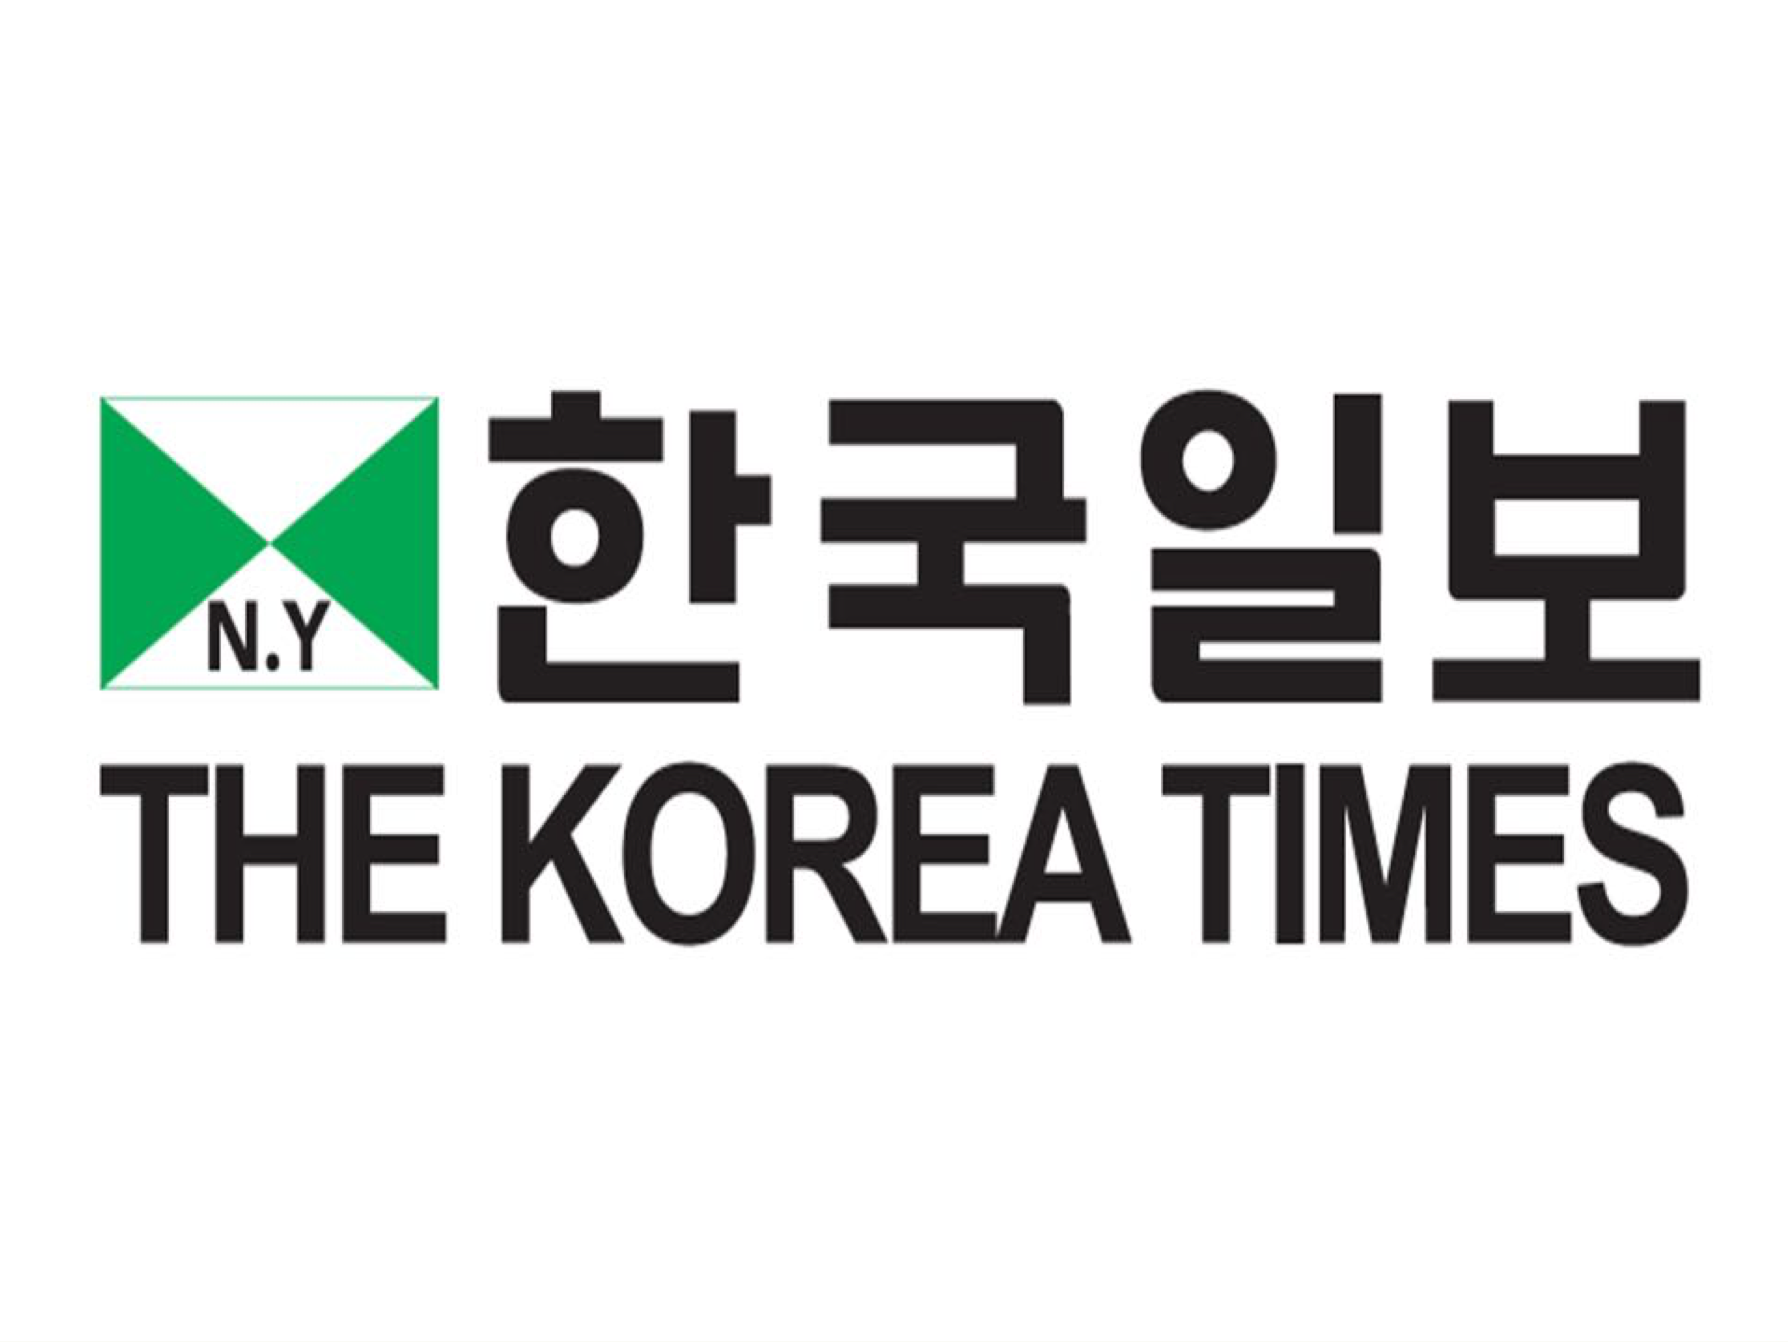 The Korea media